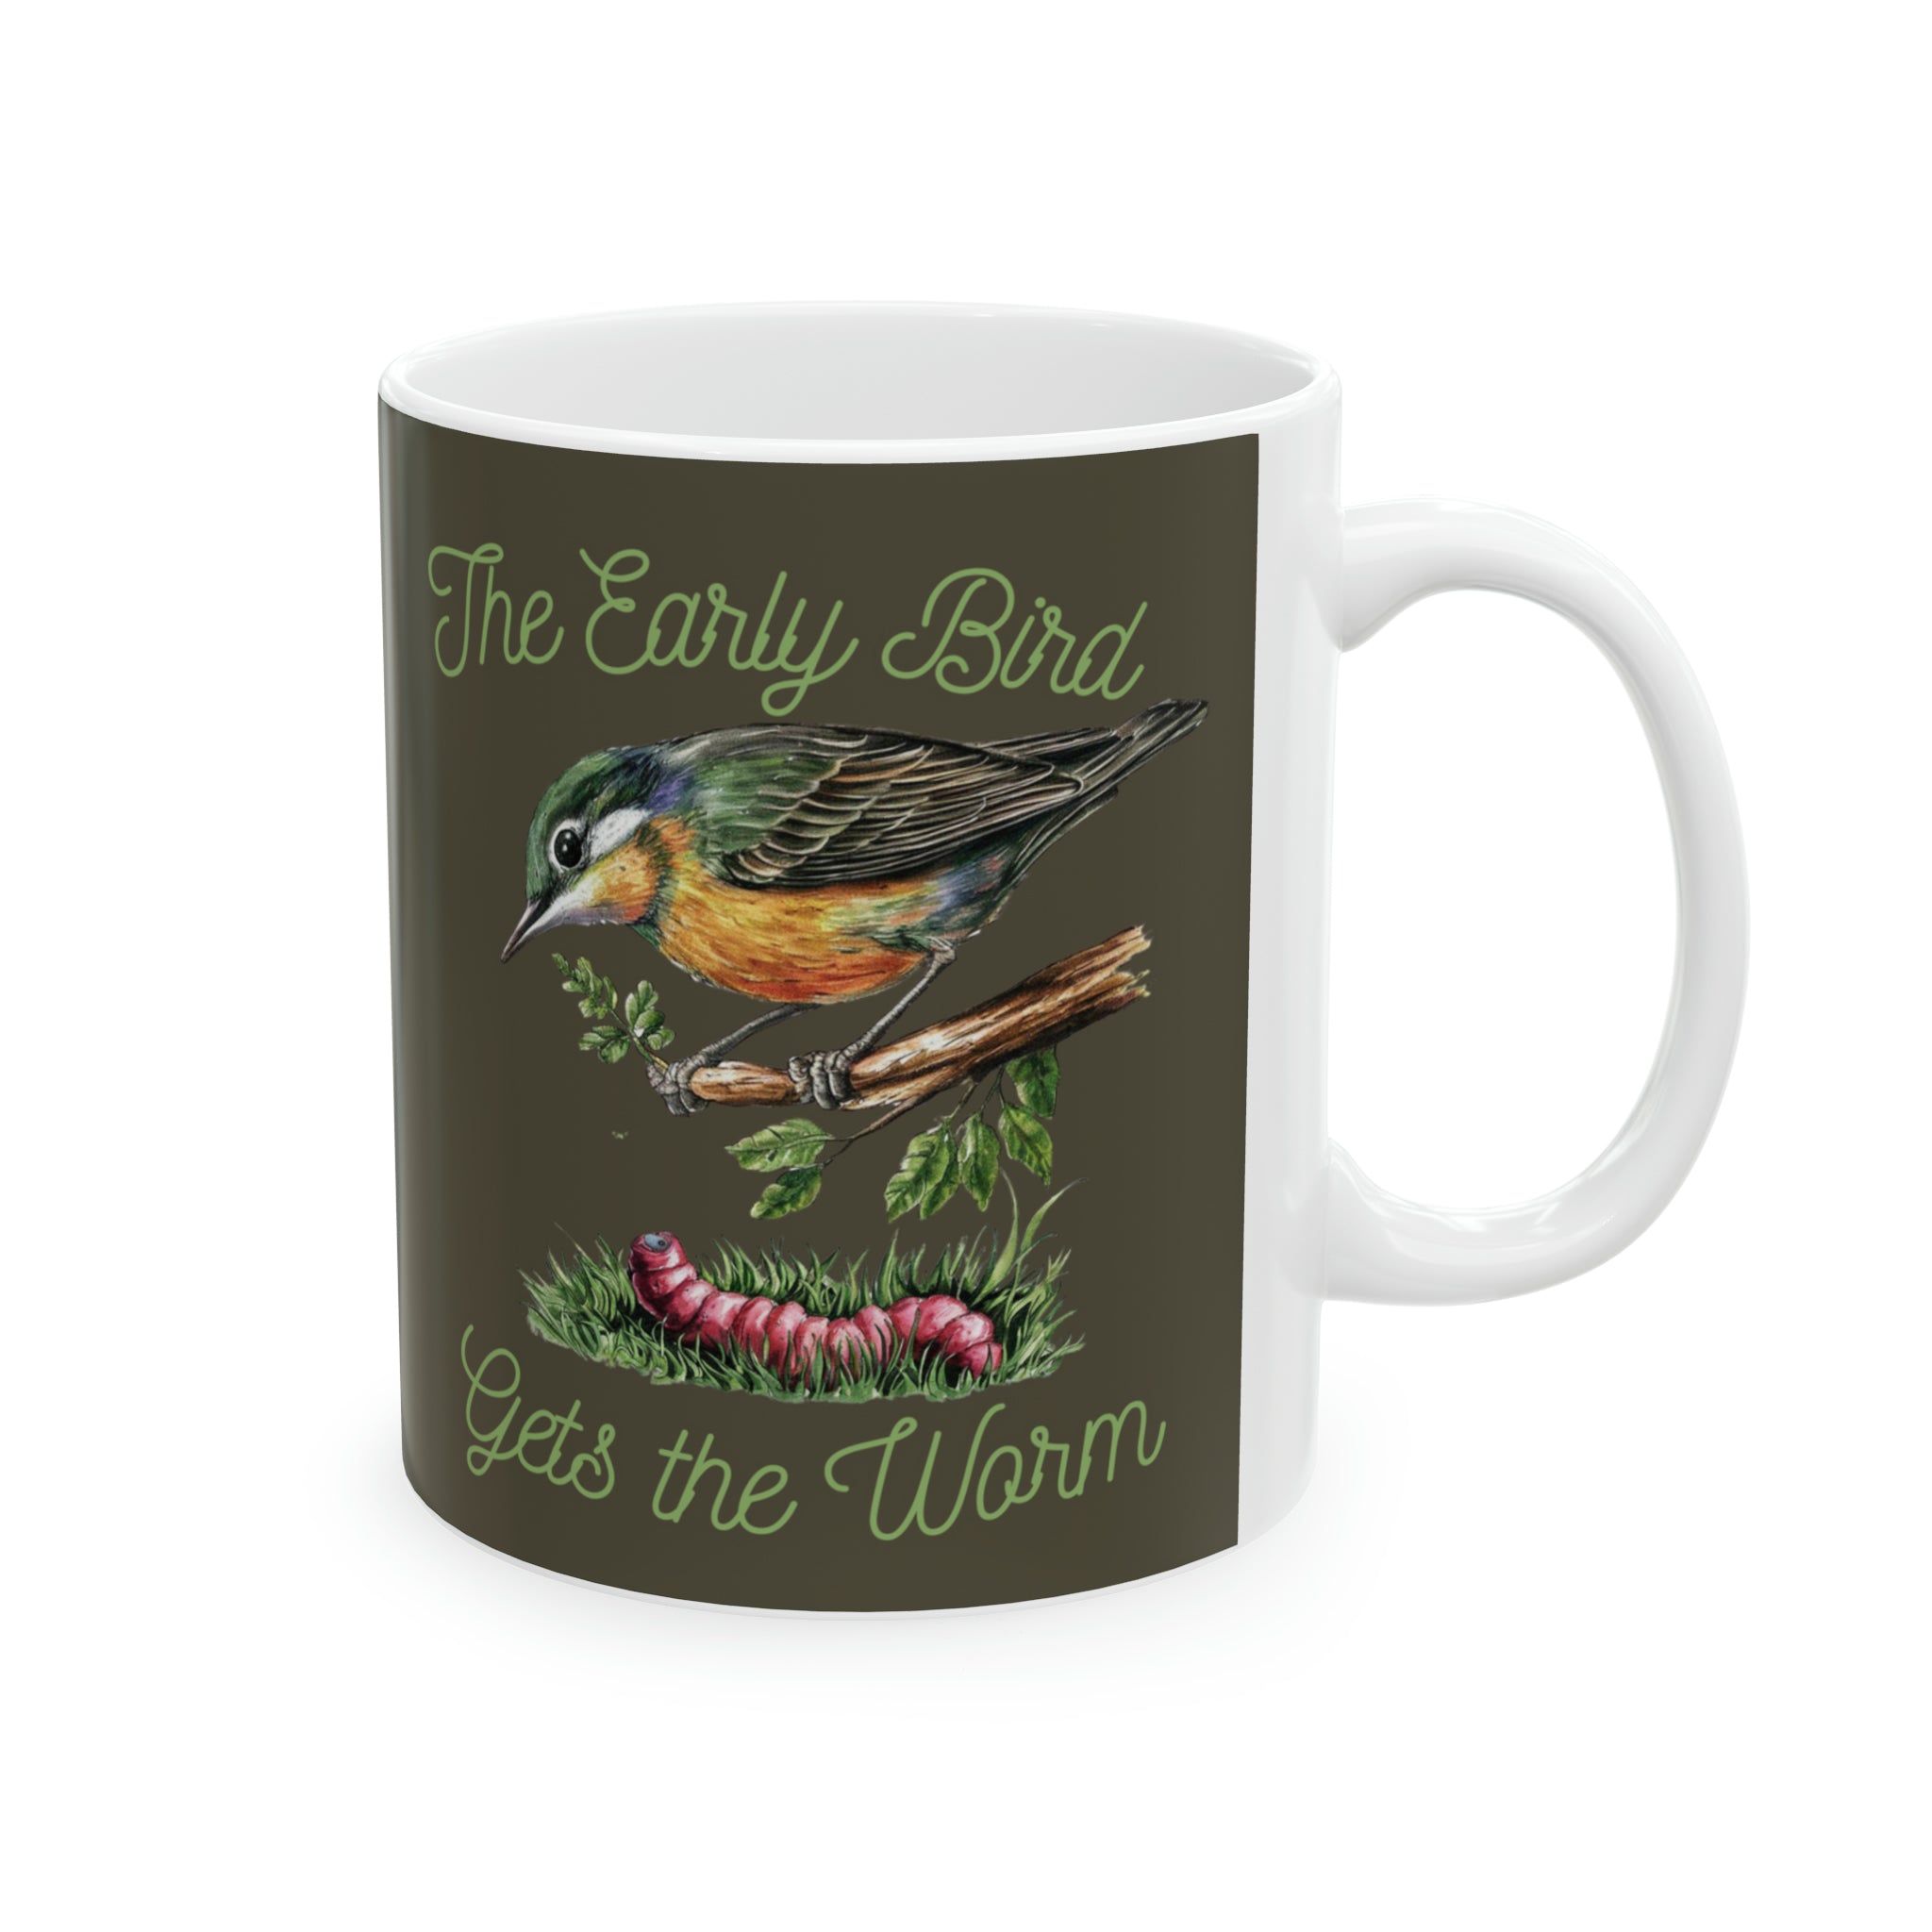 Early bird gets the worm - Ceramic Mug, 11oz